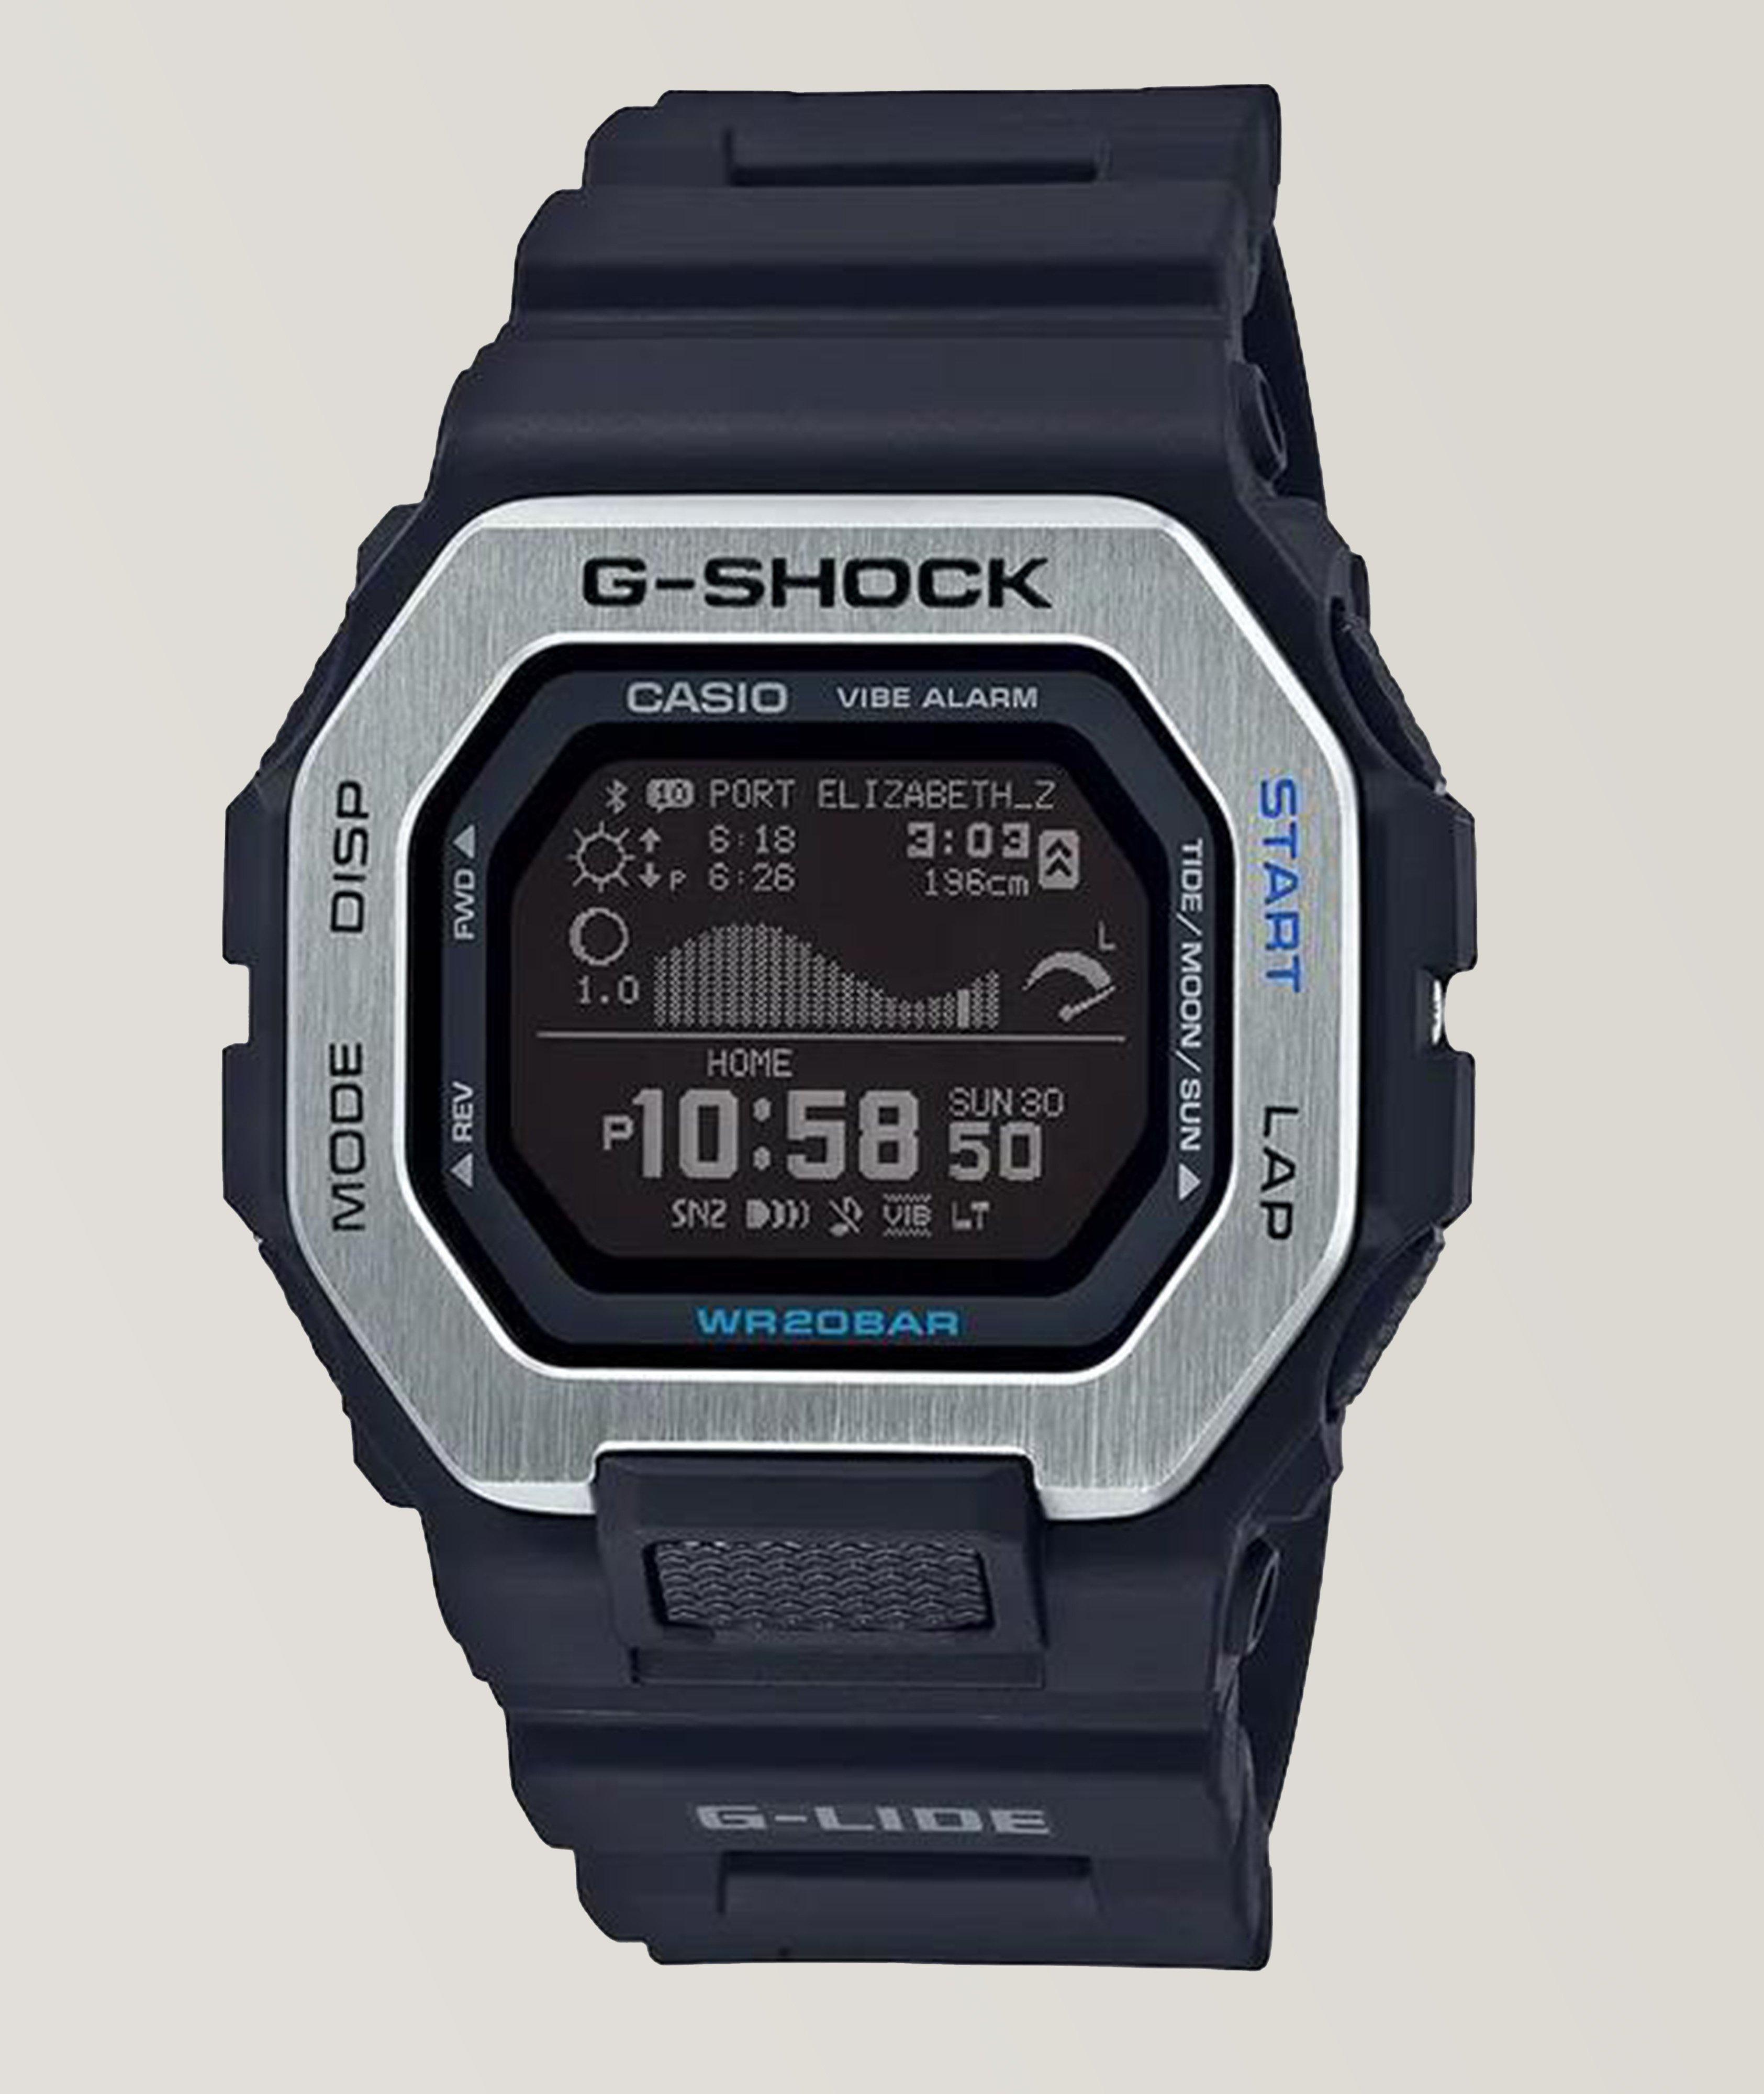 GBX100-1 Watch image 0